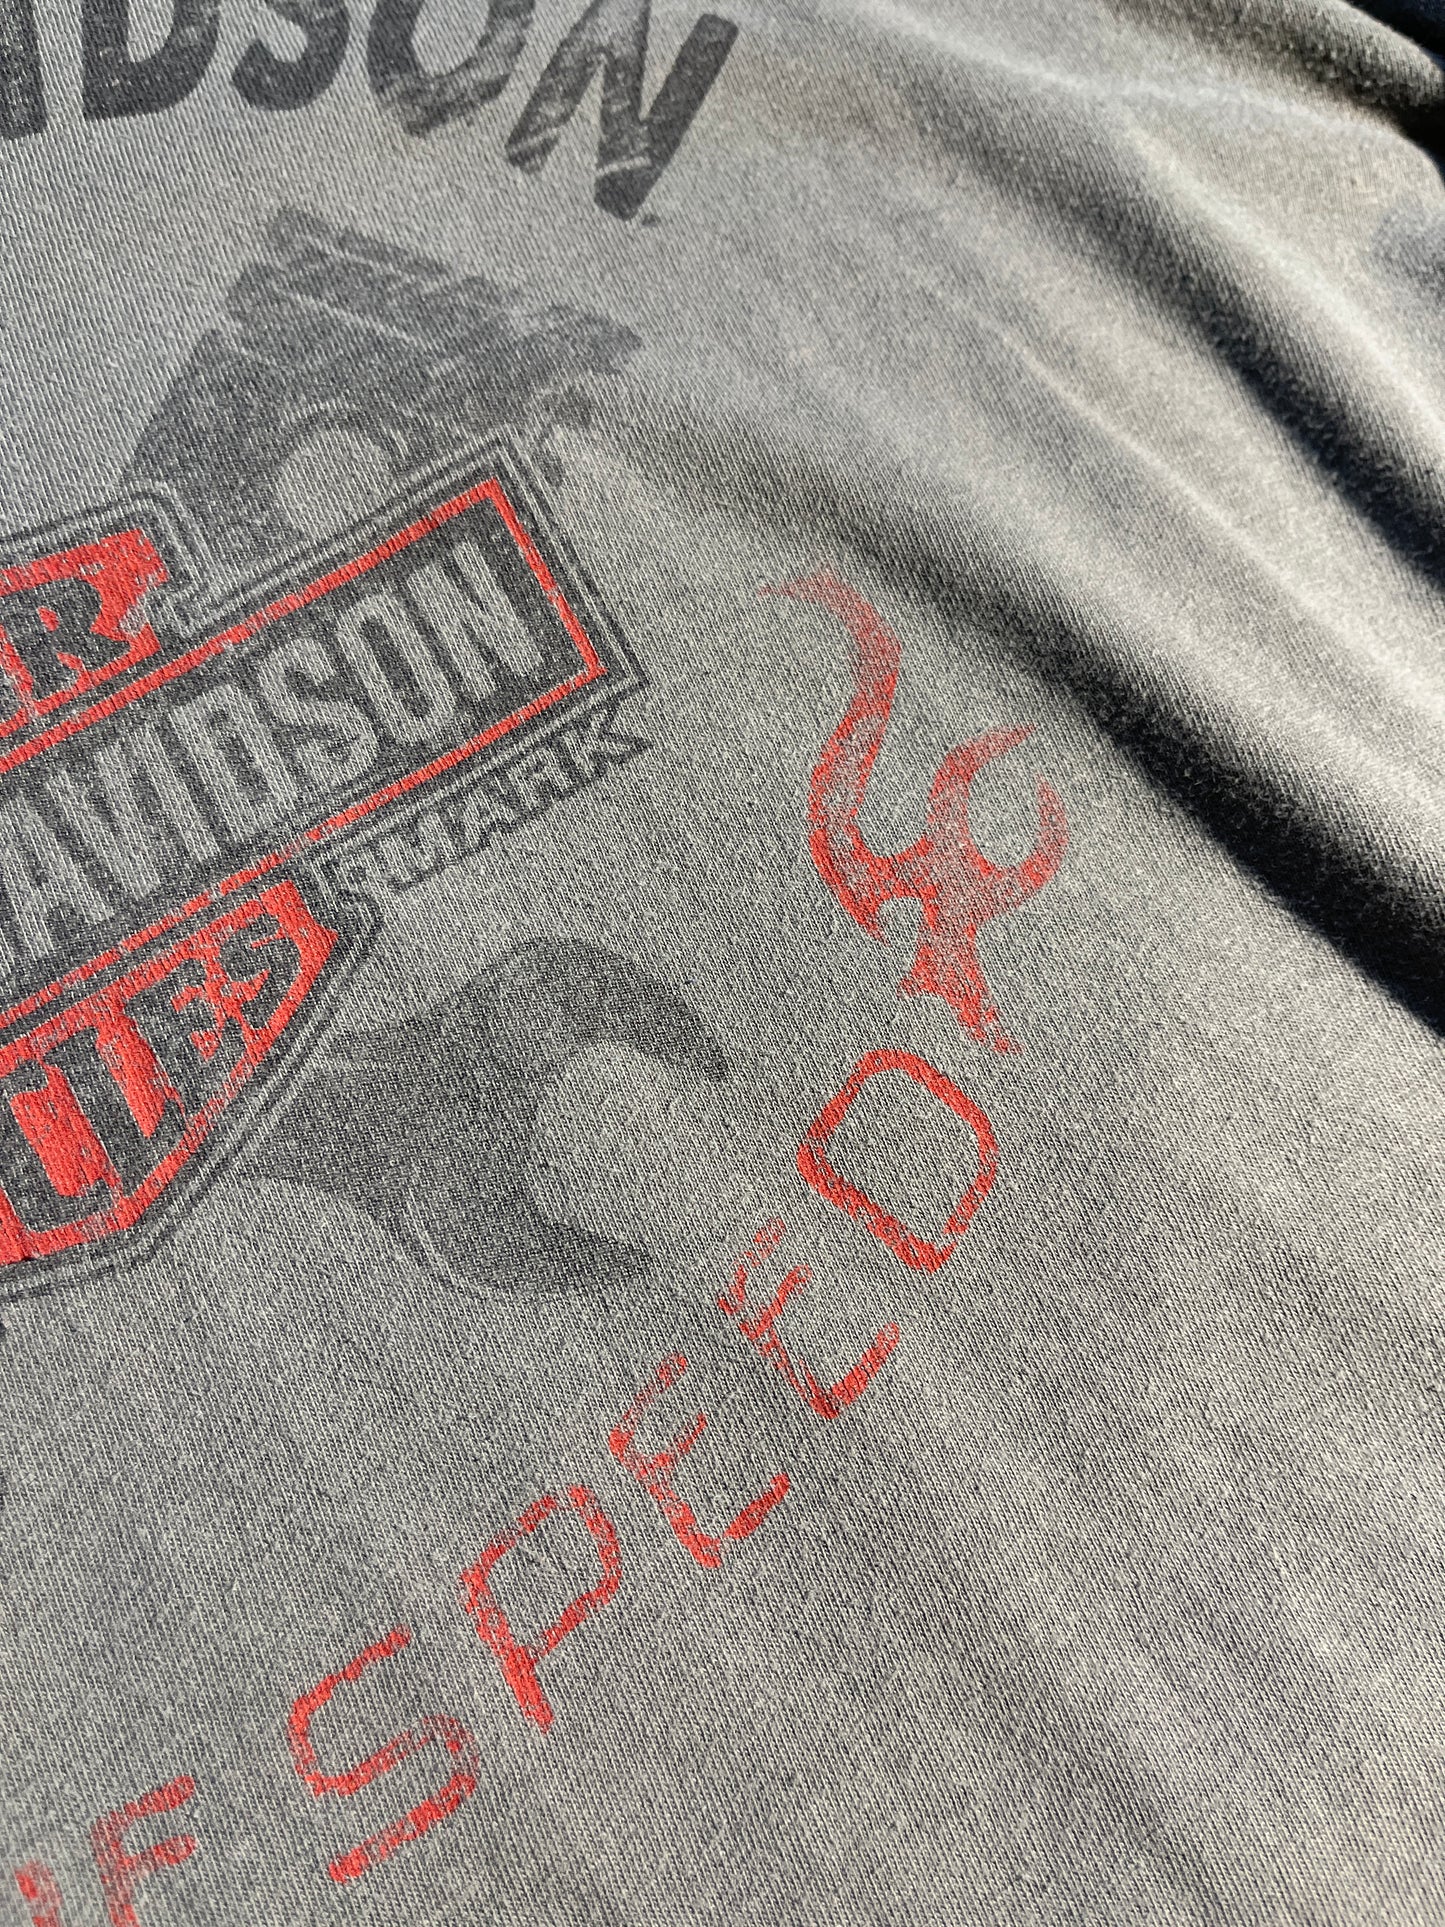 Vintage Harley Davidson Long-Sleeve Shirt Top